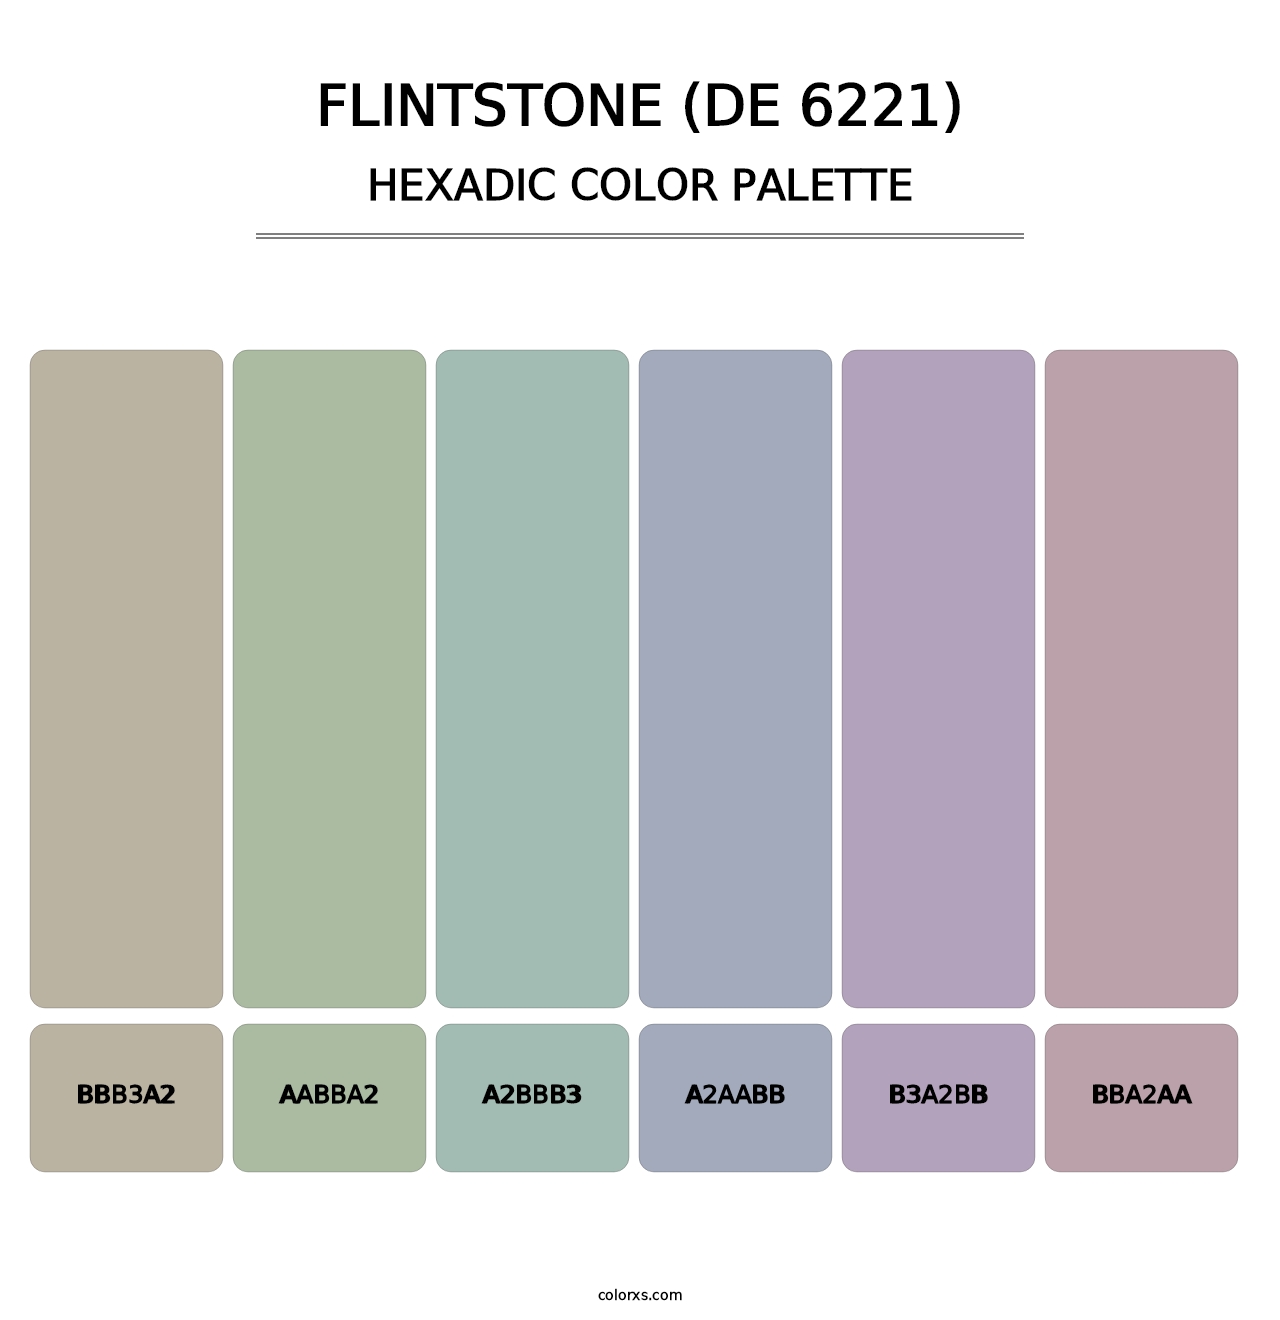 Flintstone (DE 6221) - Hexadic Color Palette